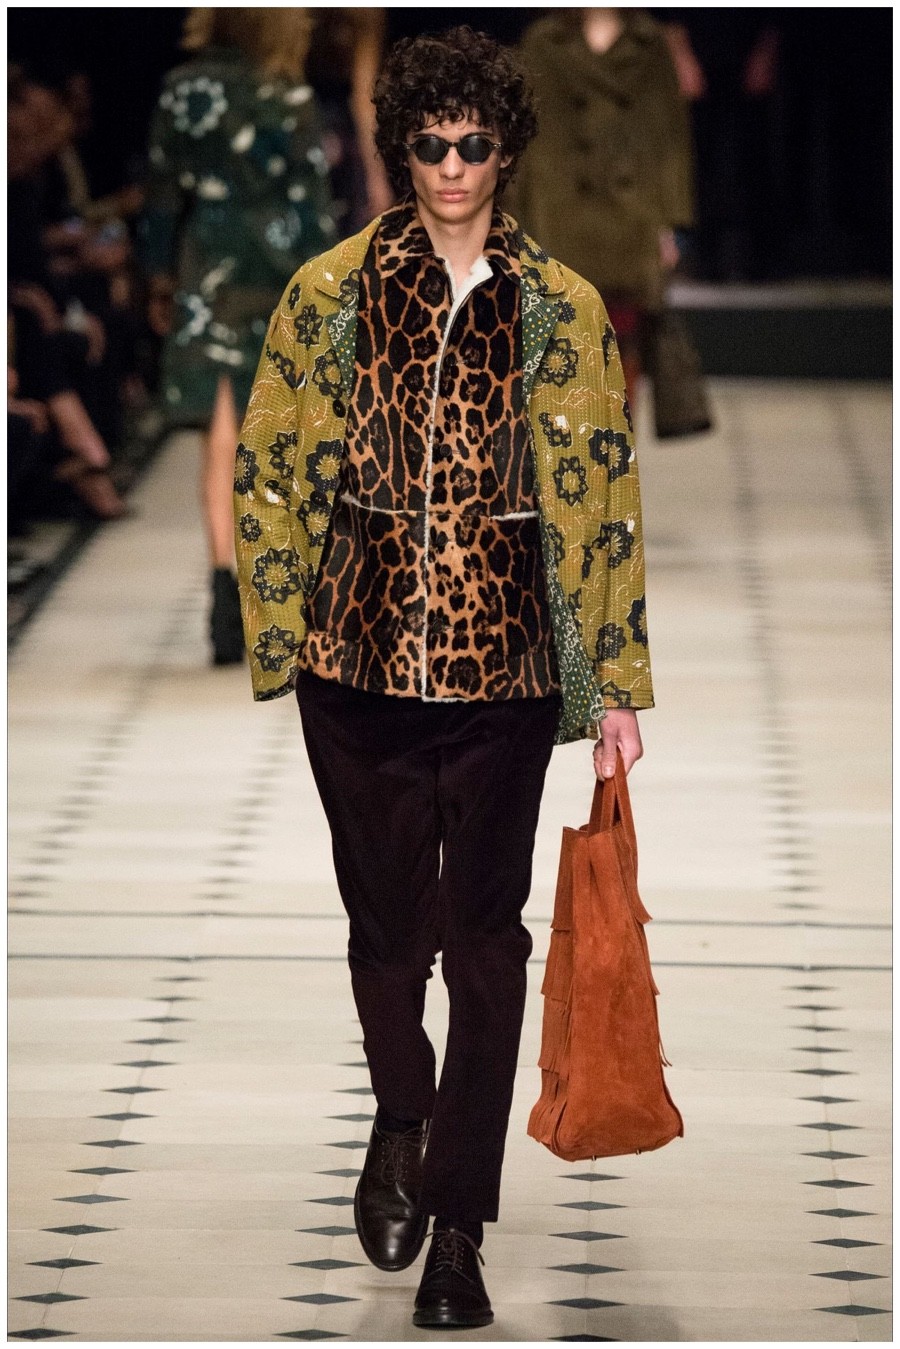 Burberry Prorsum Fall/Winter 2015 Men's Looks from London Fashion Week